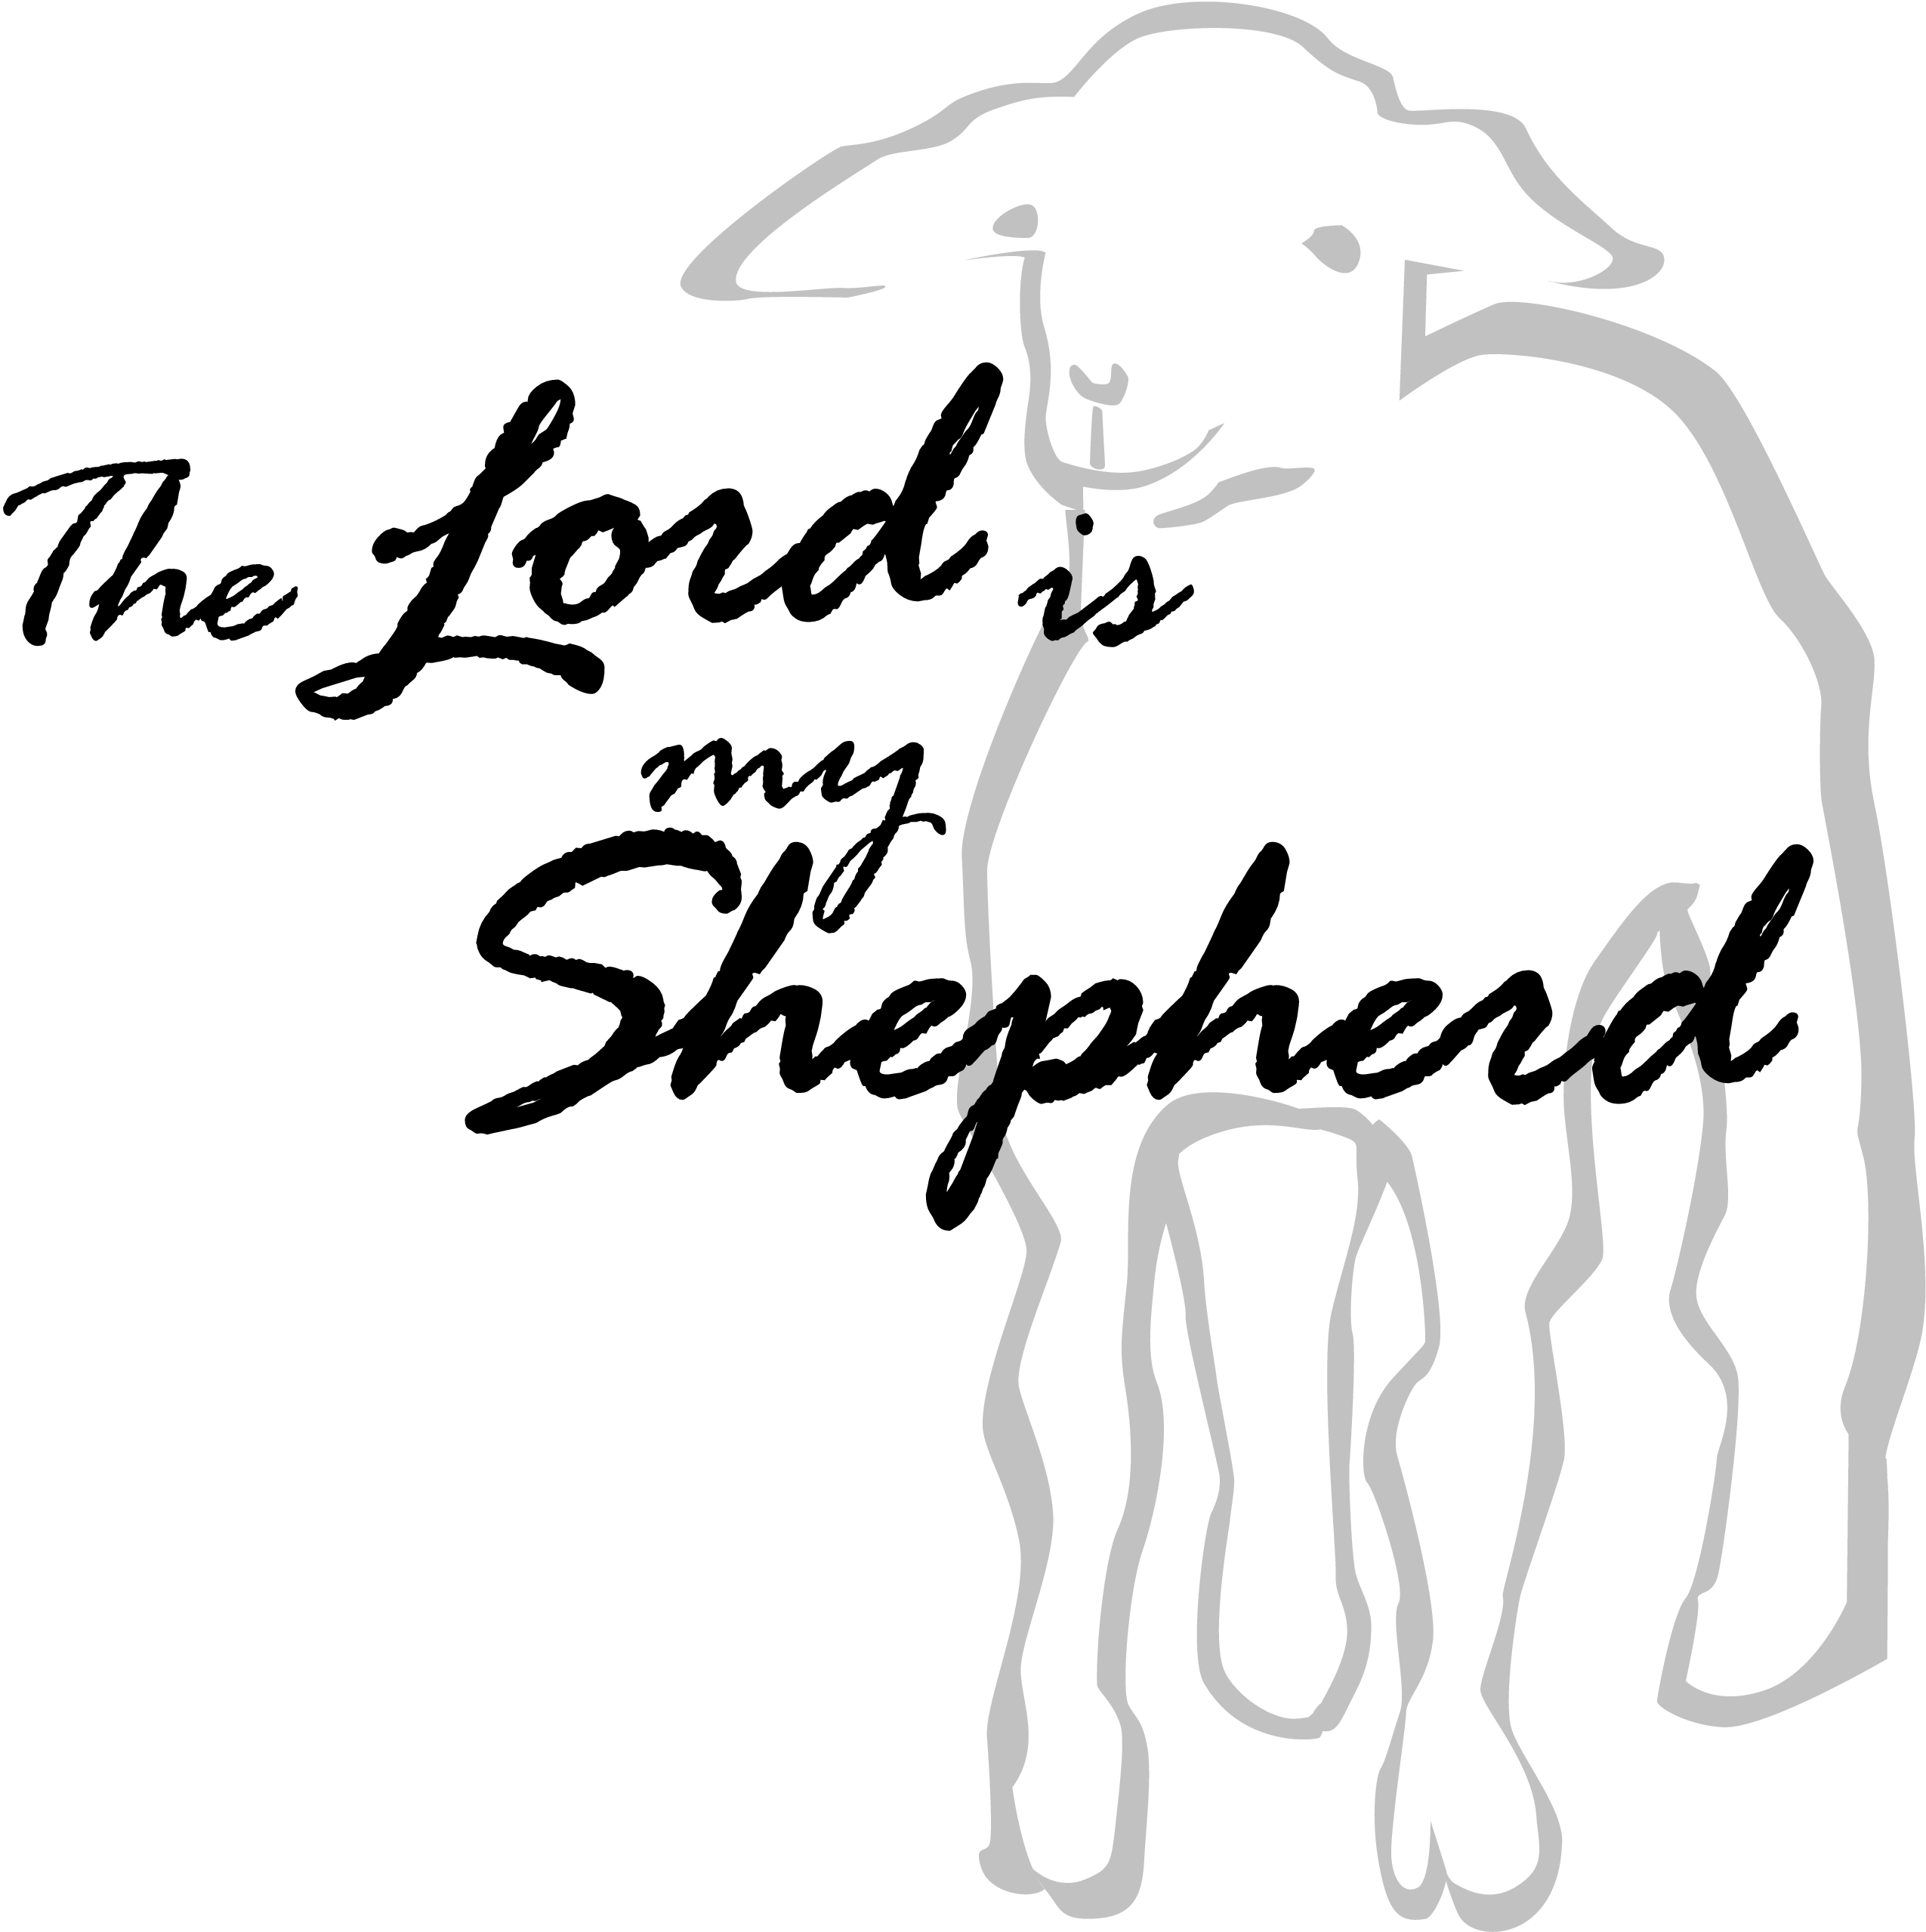 christian clip art good shepherd - photo #13